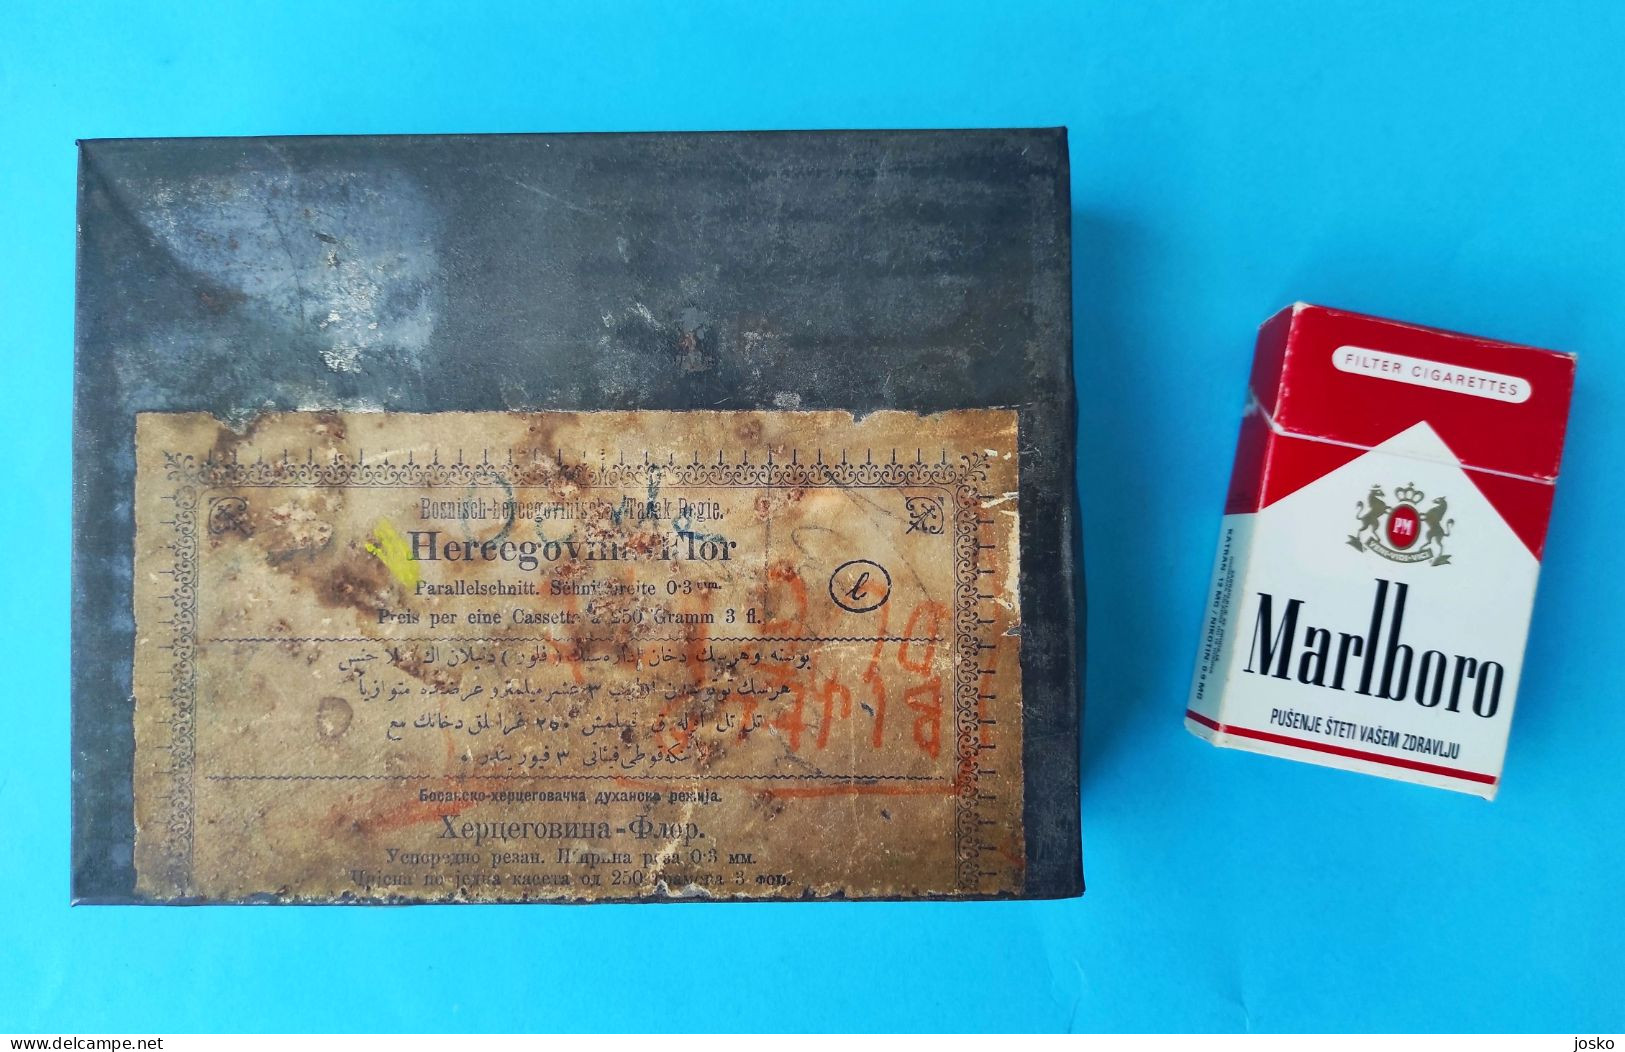 HERCEGOVINA FLOR - Bosnia And Herzegovina Antique Tobacco Tin Box (1883.y.) * Tabak Tabac Tabacco Tabaco Cigarettes - Contenitori Di Tabacco (vuoti)